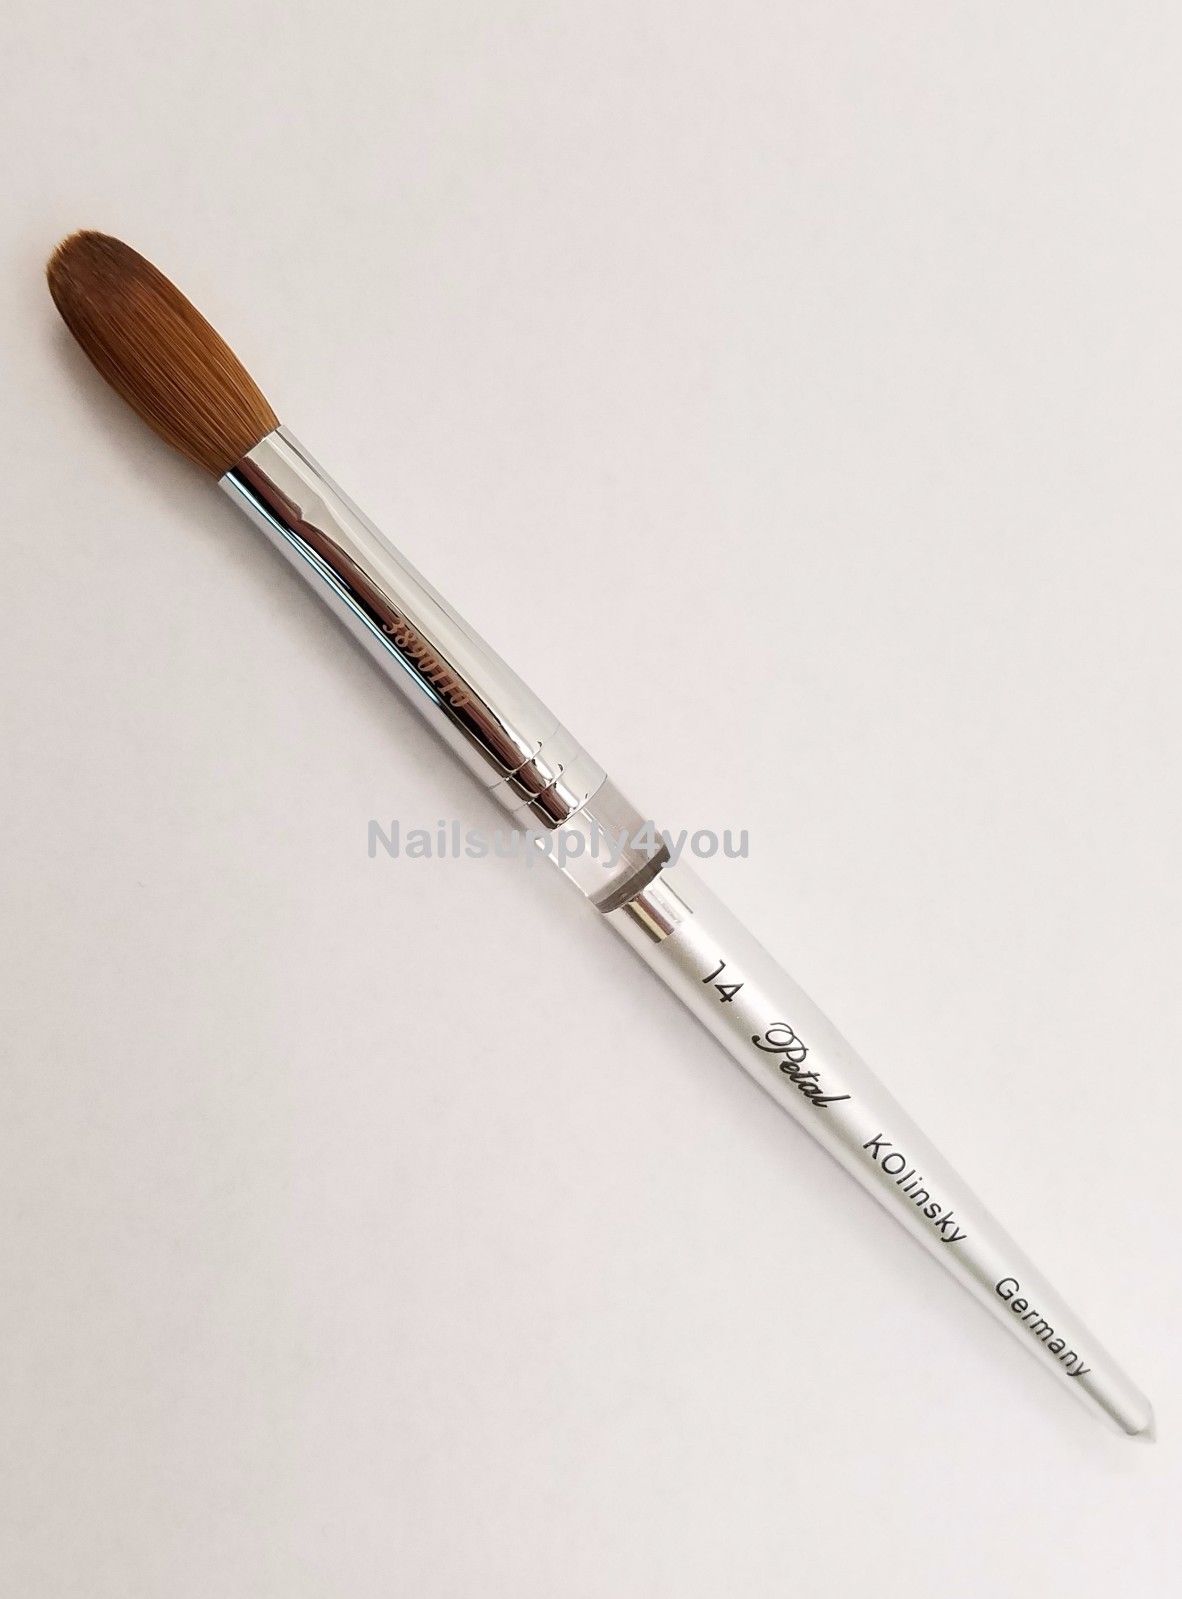 Acrylic Nail Brush Manicure Powder - Petal Kolinsky Silver Handle (CRIMPED)